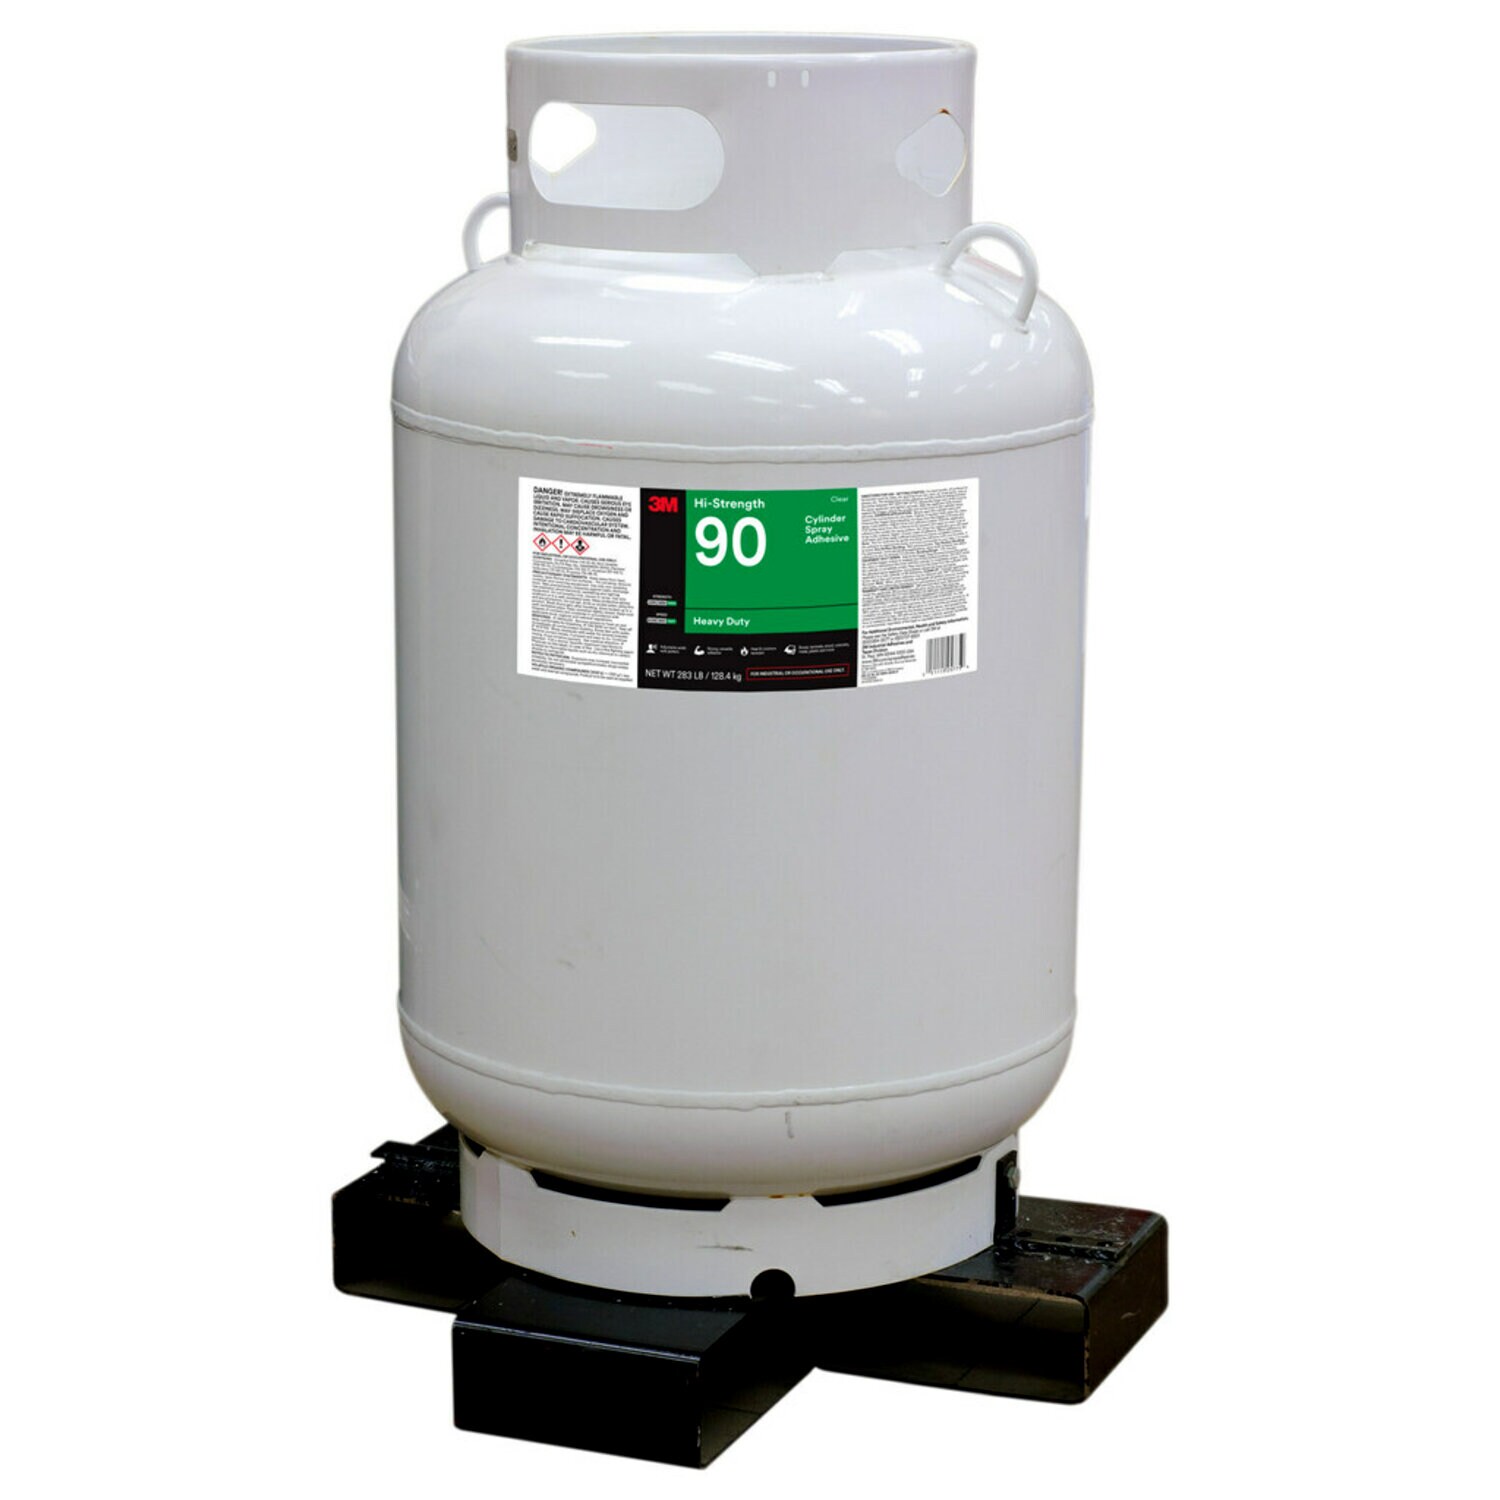 7100139490 - 3M Hi-Strength 90 Cylinder Spray Adhesive, Clear, Jumbo Cylinder (Net
Wt 283.2 lb)